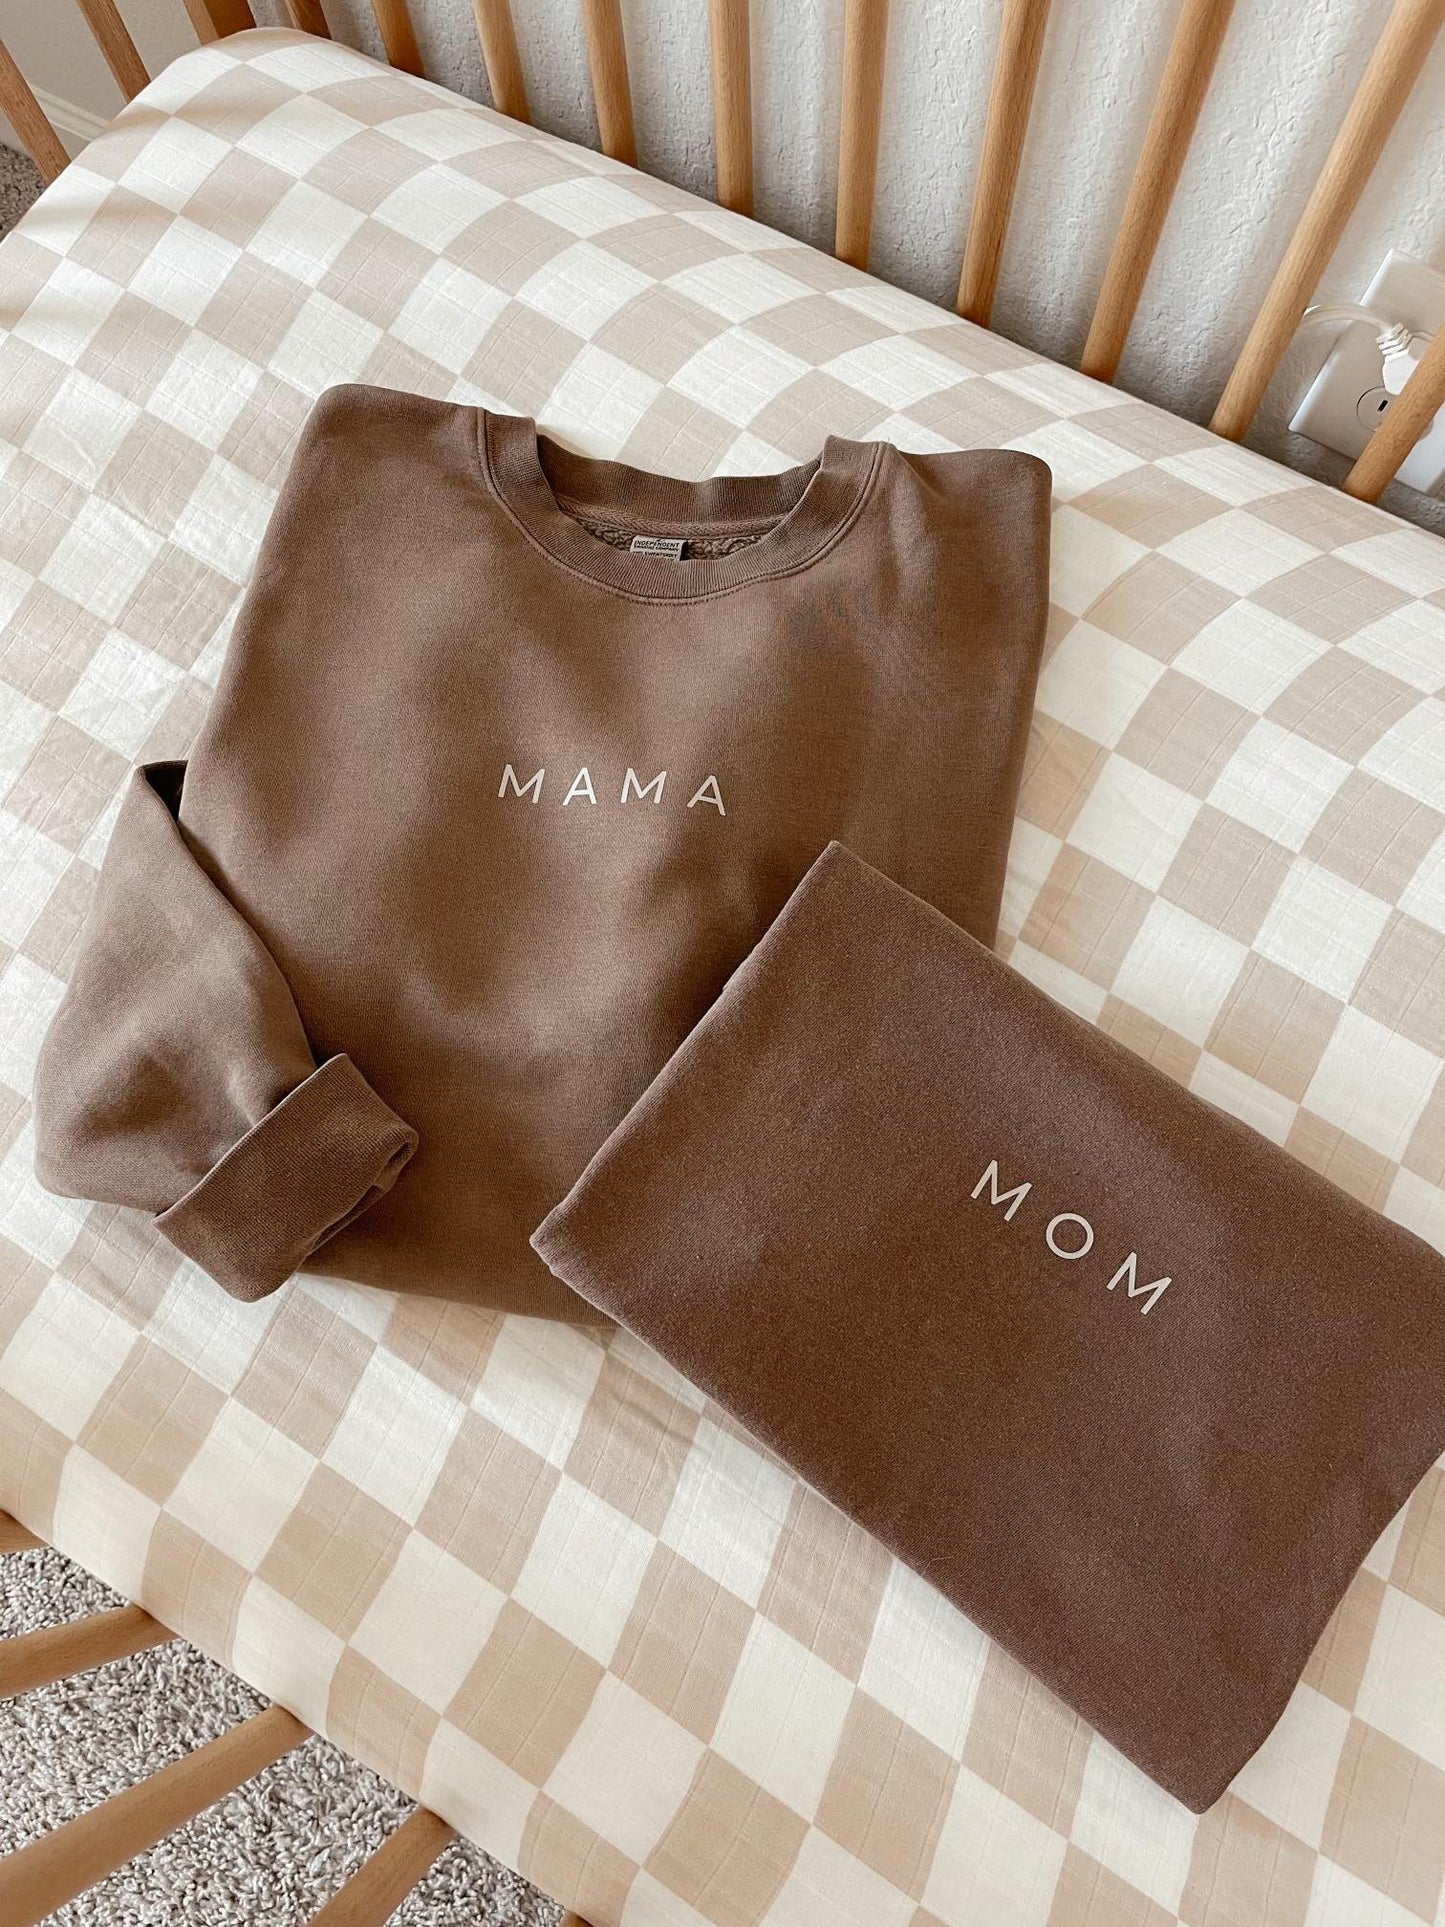 Mama (Tan Minimal) - Sweatshirt (Cocoa)